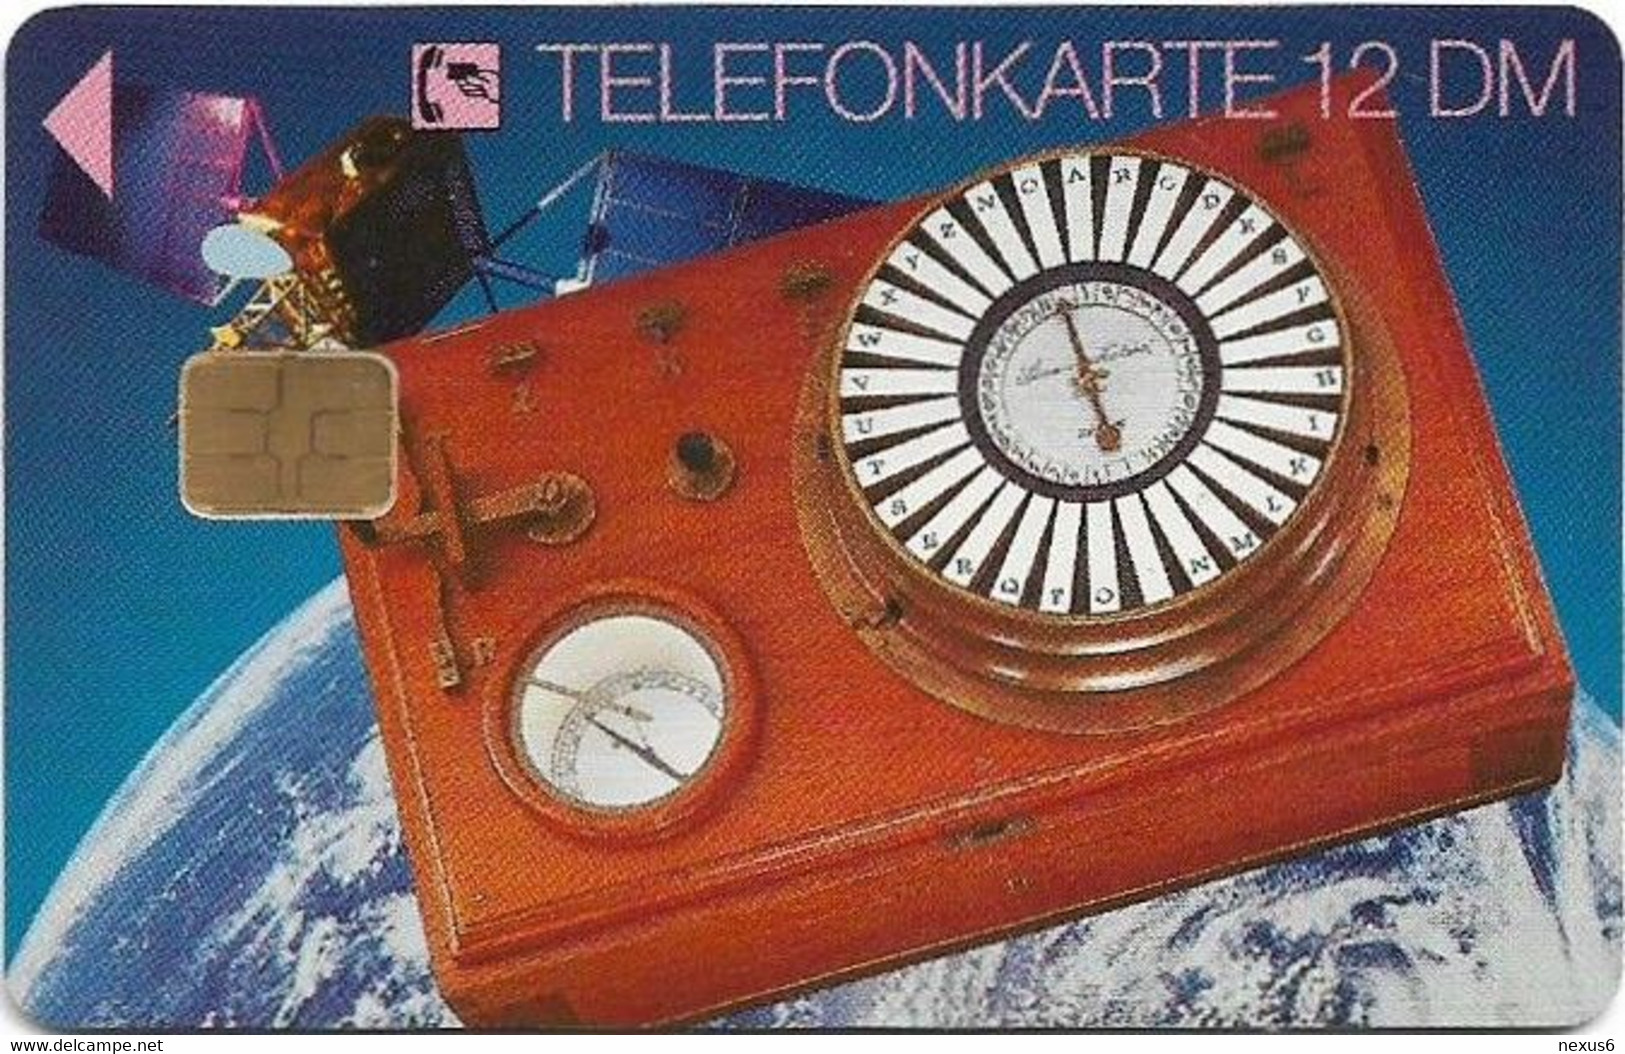 Germany - Alte Morseapparate 4 - Zeigertelegraf - E 16/09.94 - 12DM, 30.000ex, Mint - E-Series: Editionsausgabe Der Dt. Postreklame